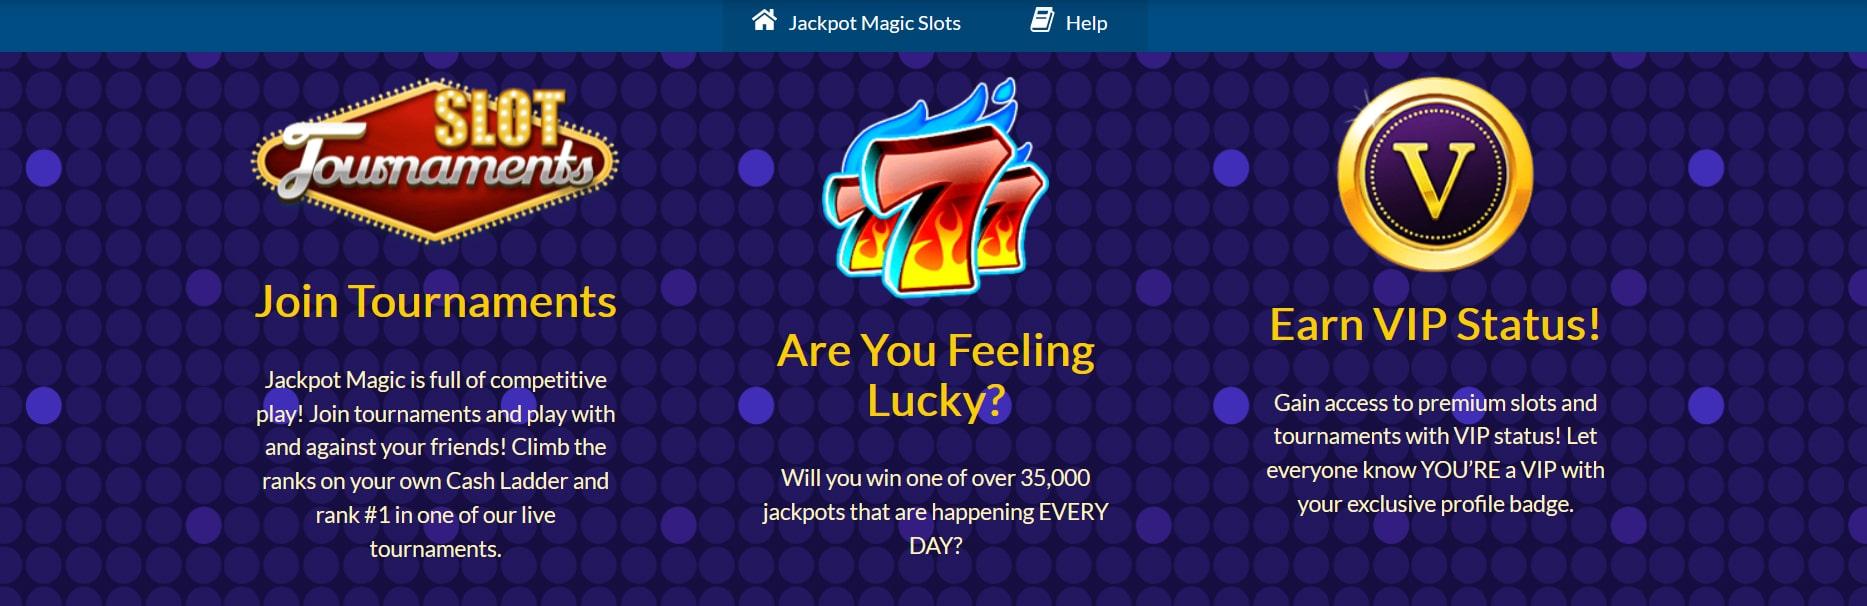 Jackpot Magic Slots VIP Program